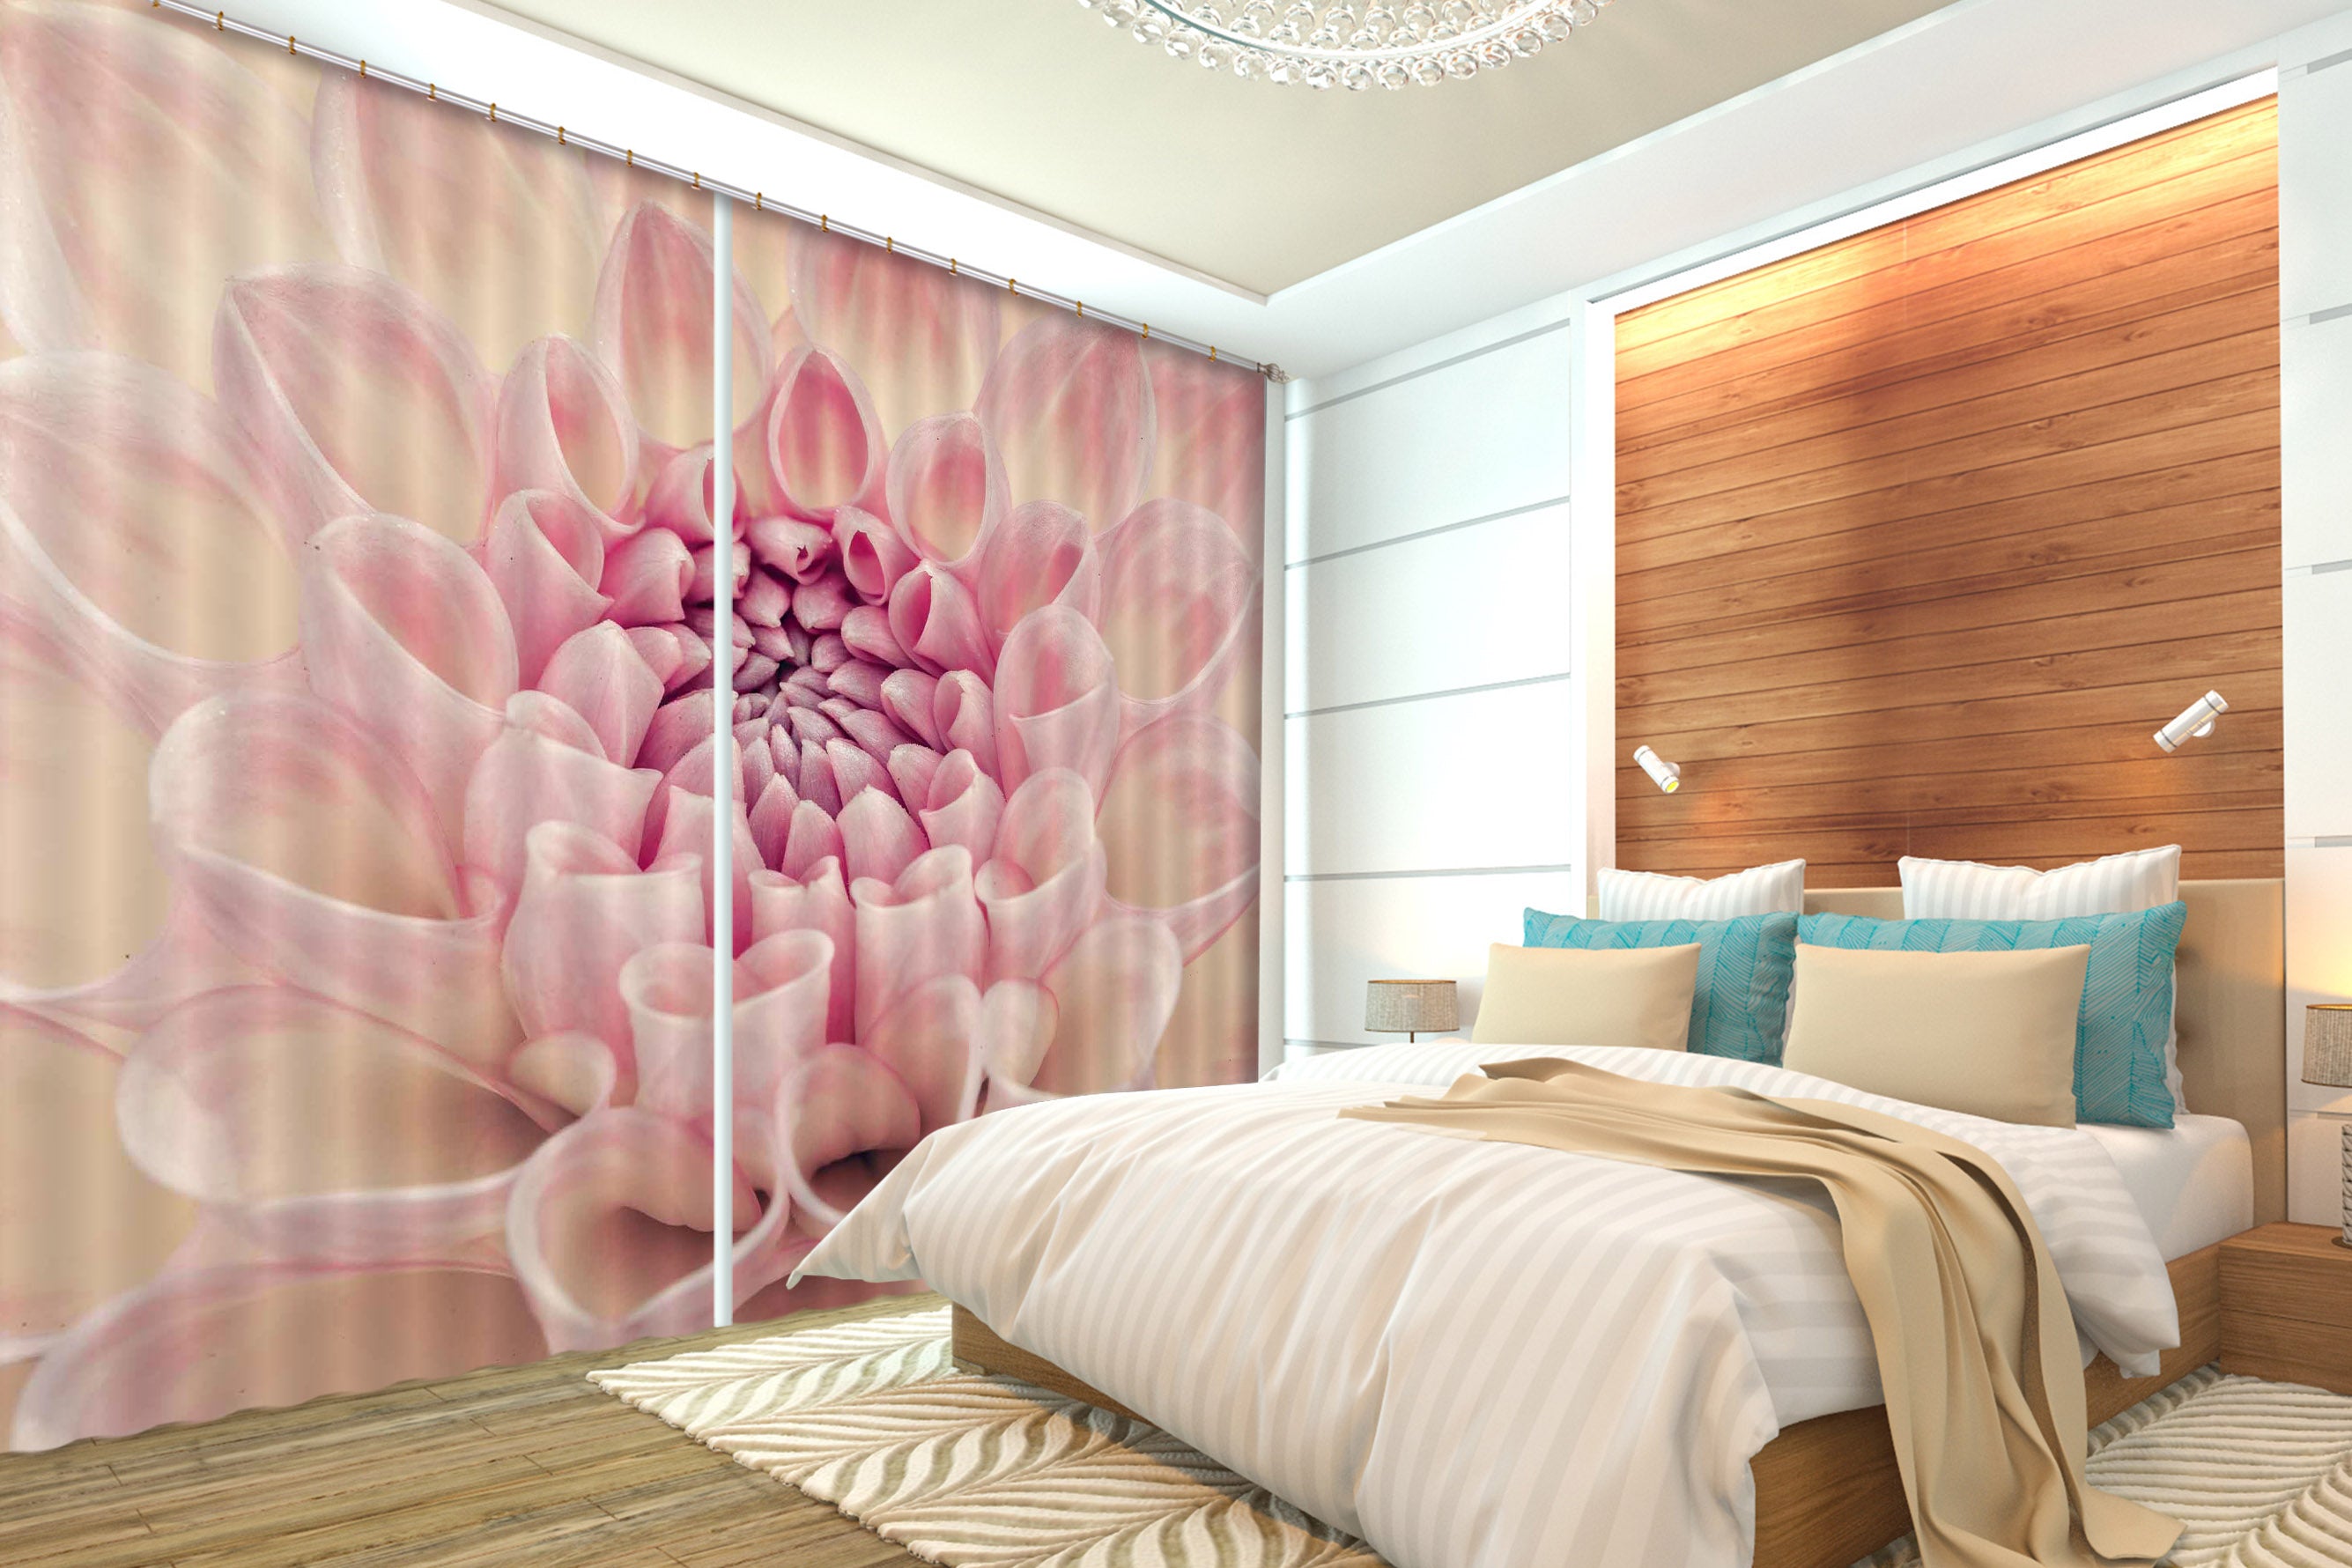 3D Pink Flower Bud 6331 Assaf Frank Curtain Curtains Drapes